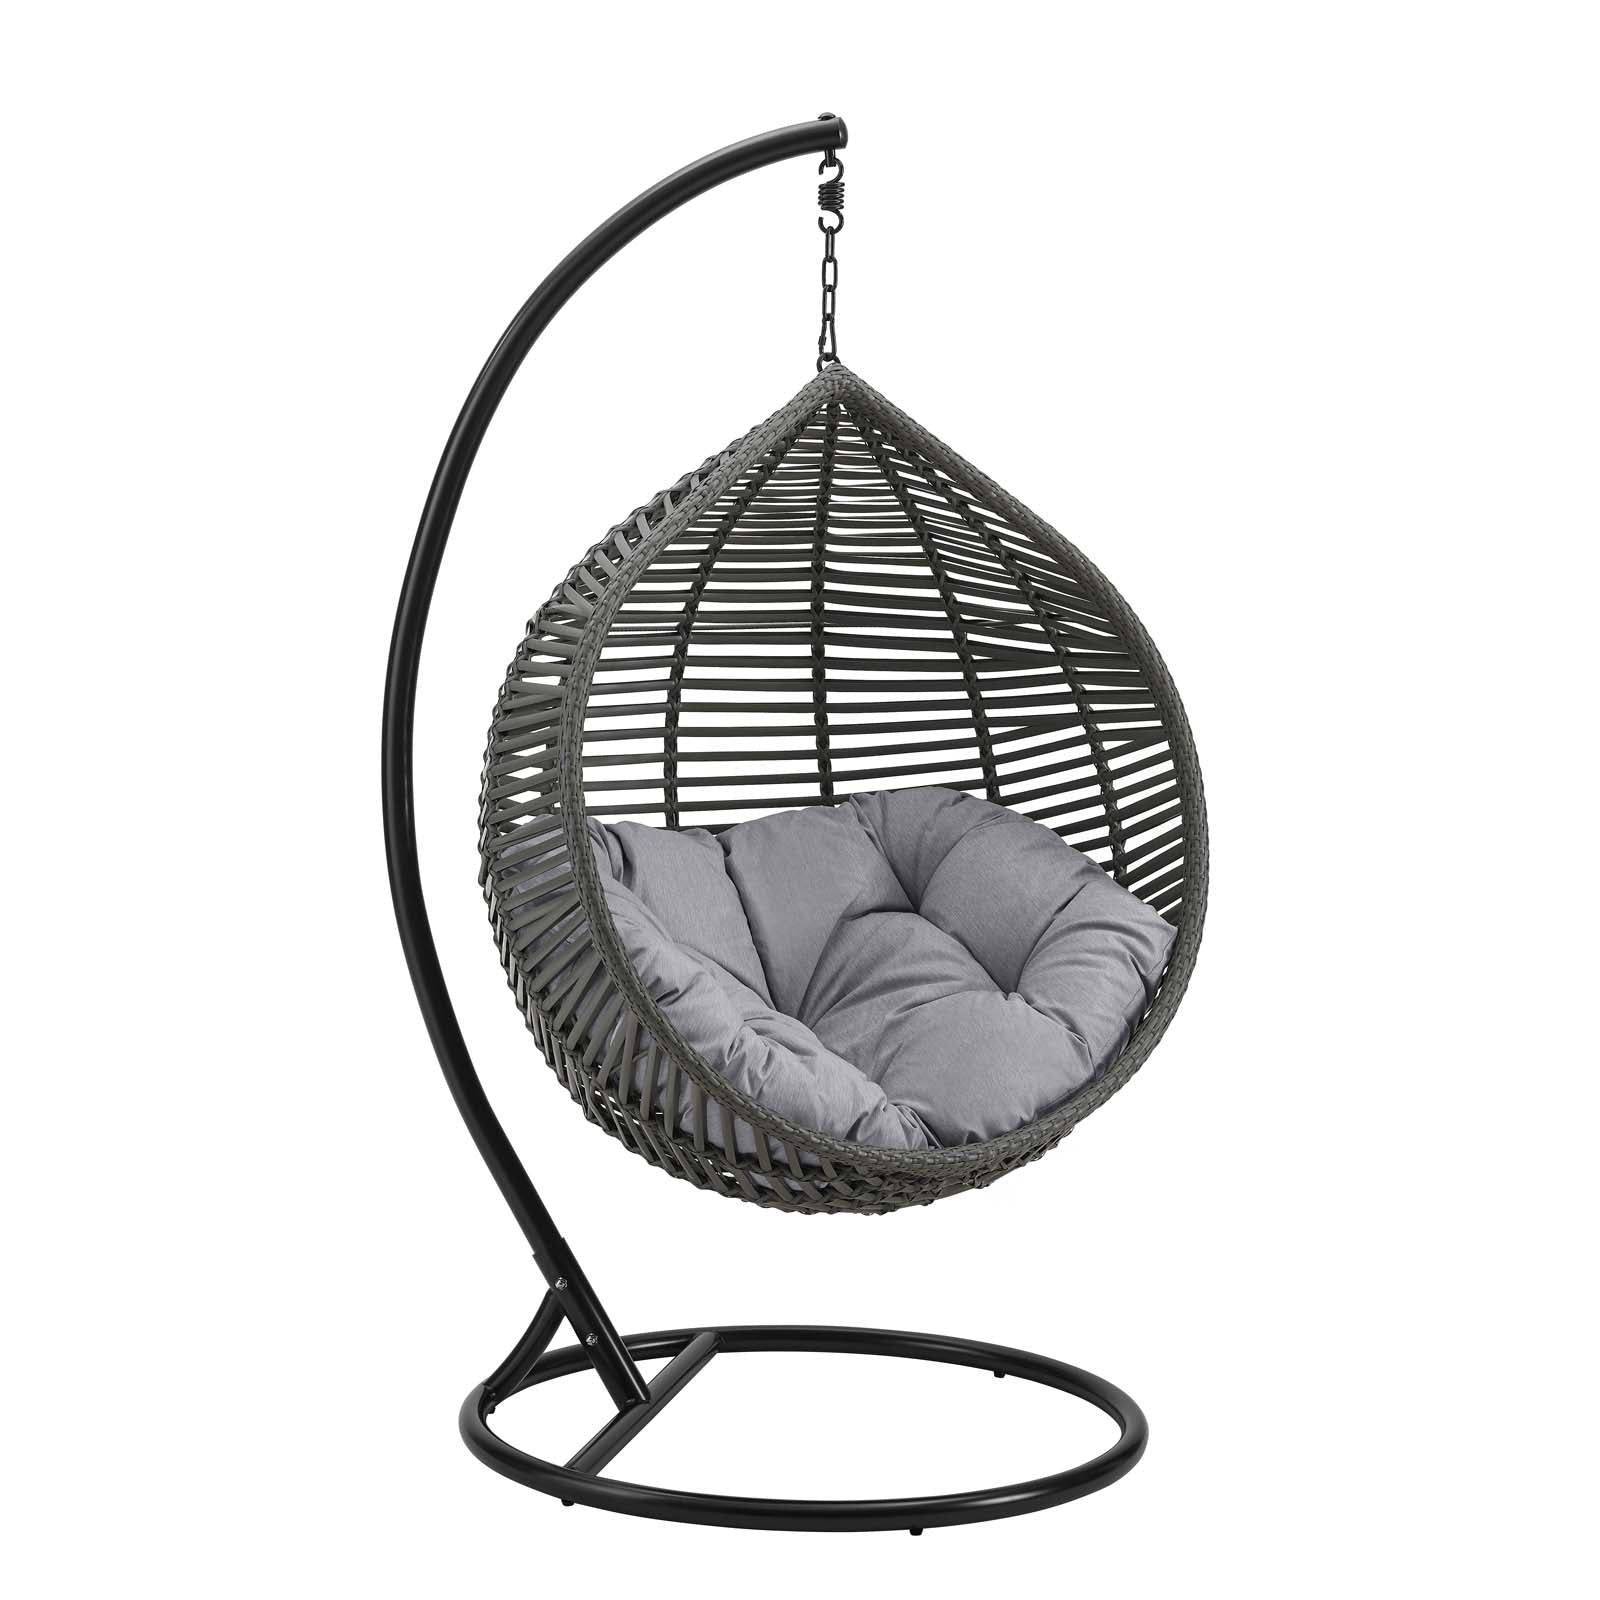 Hammock Net Swing Chair, Garner Teardrop Outdoor Patio Swing Chair in Gray Color - With 2 Seat Cushions